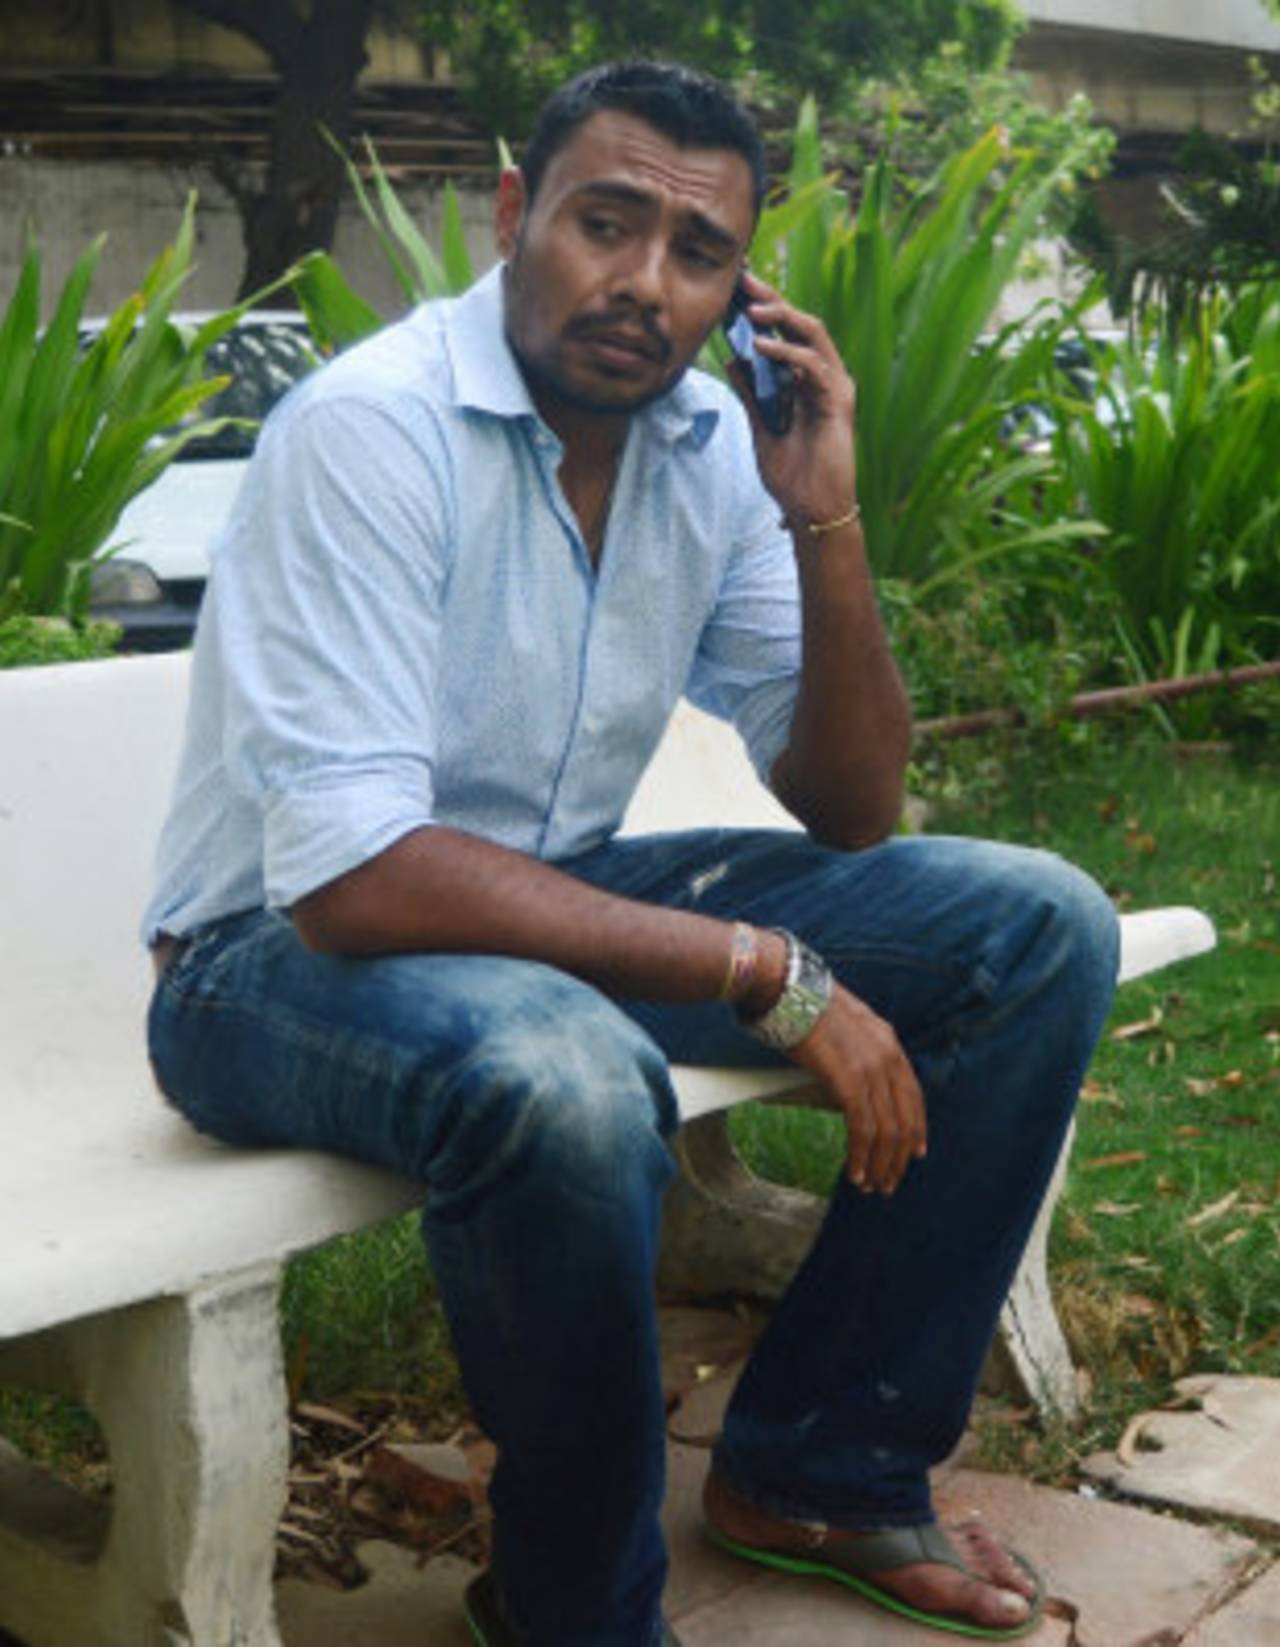 Danish Kaneria on the phone outside his apartment, Karachi, July 5, 2013